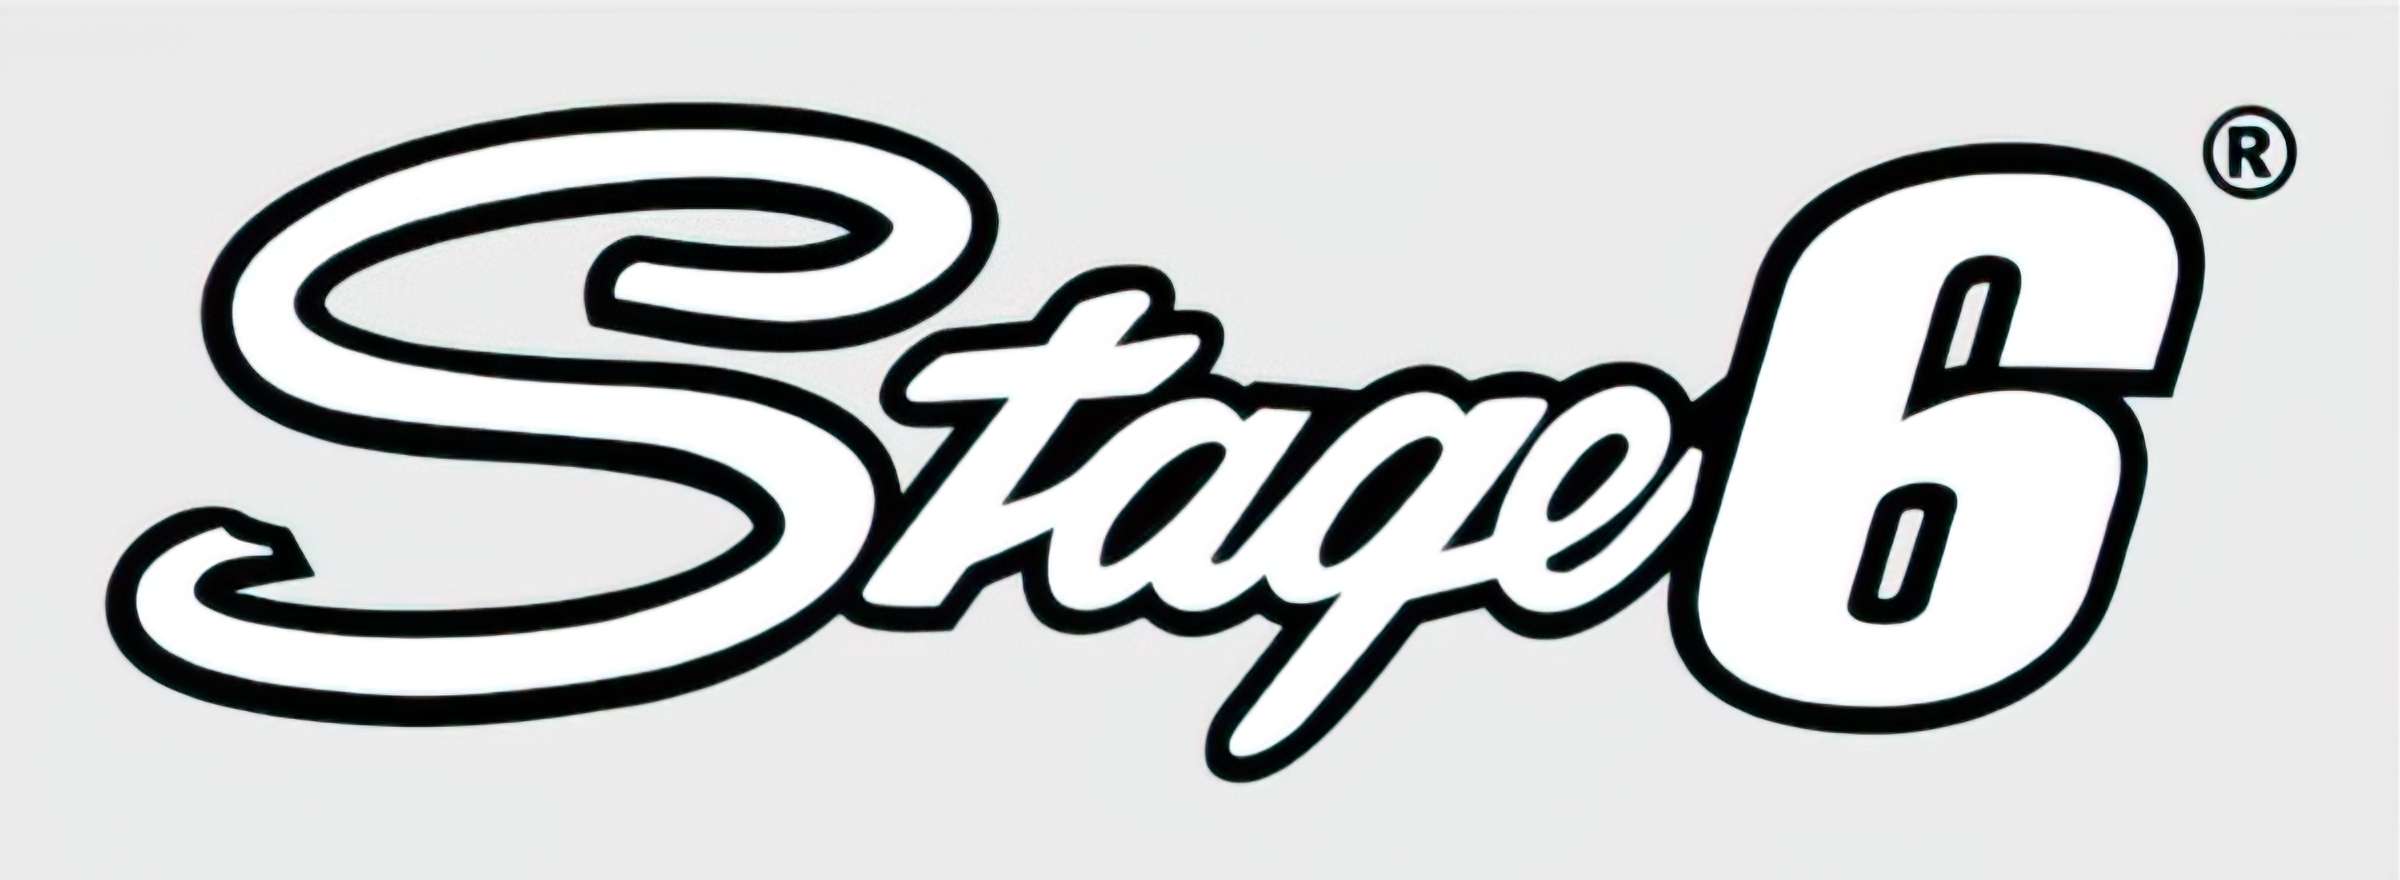 stage6-logo - Actualités Scooter par Scooter Mag